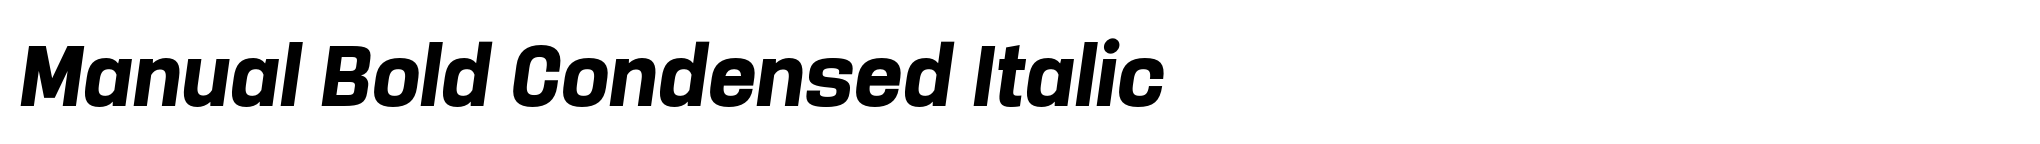 Manual Bold Condensed Italic image